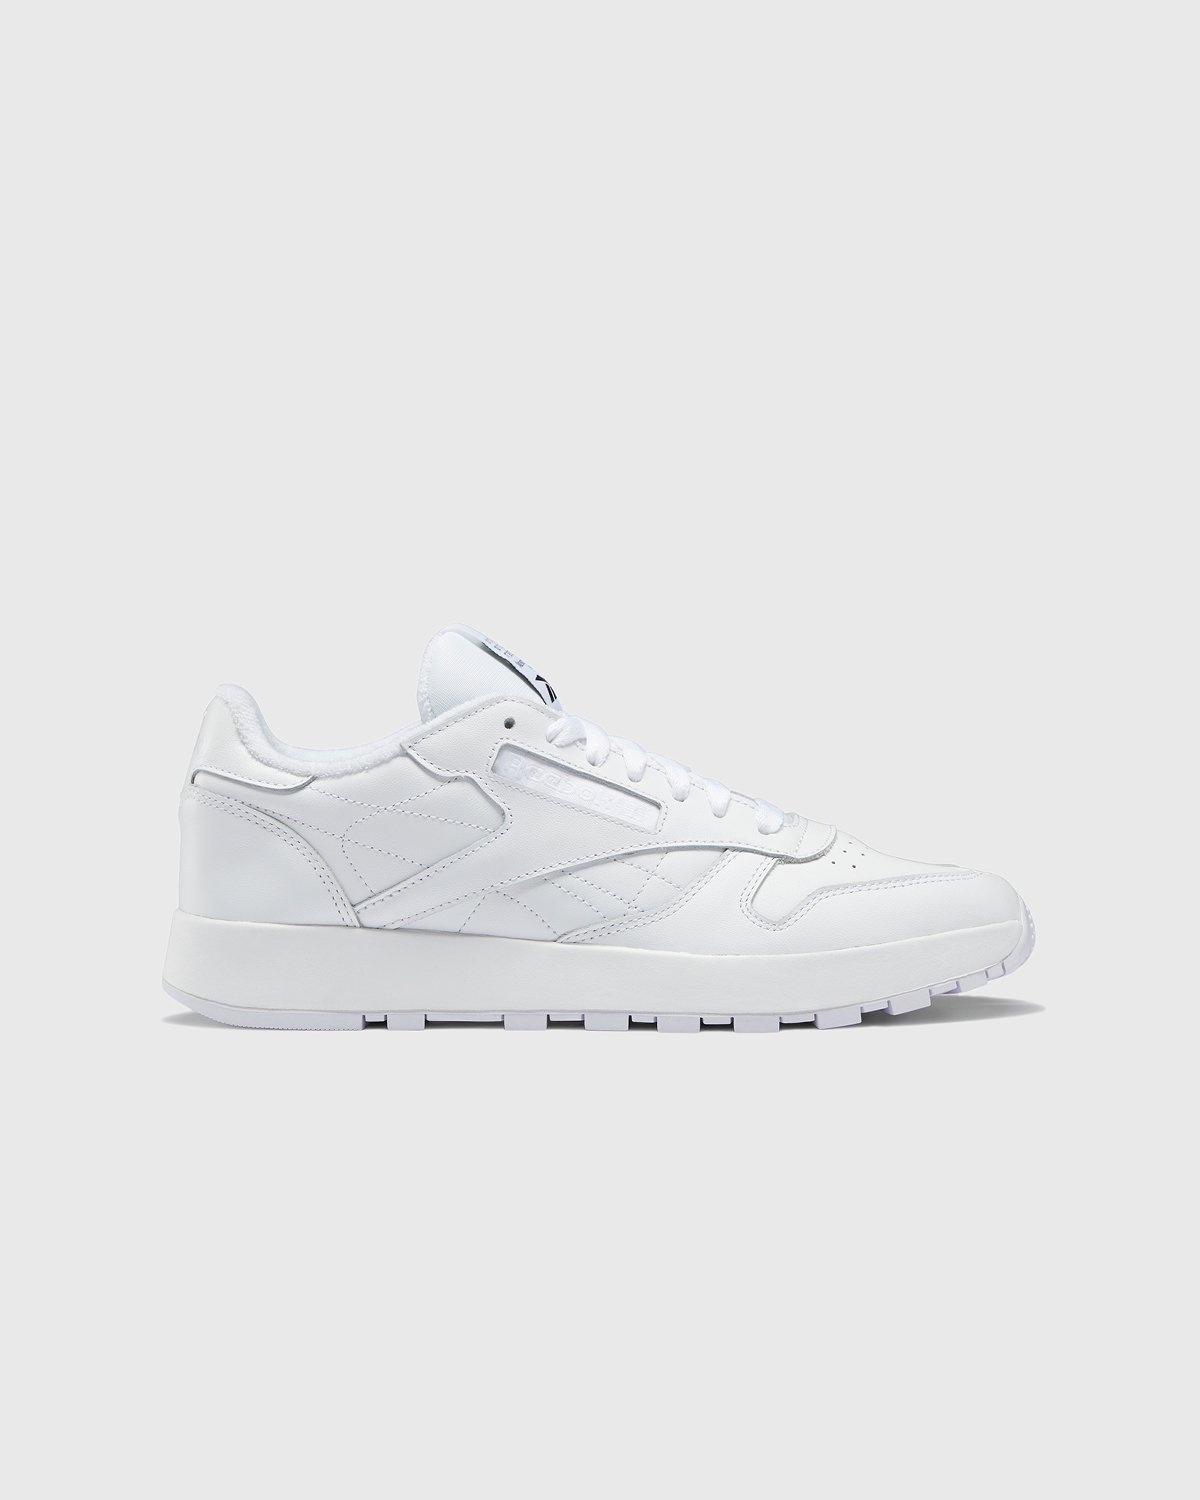 Maison Margiela x Reebok – Classic Leather Tabi White - Low Top Sneakers - White - Image 1